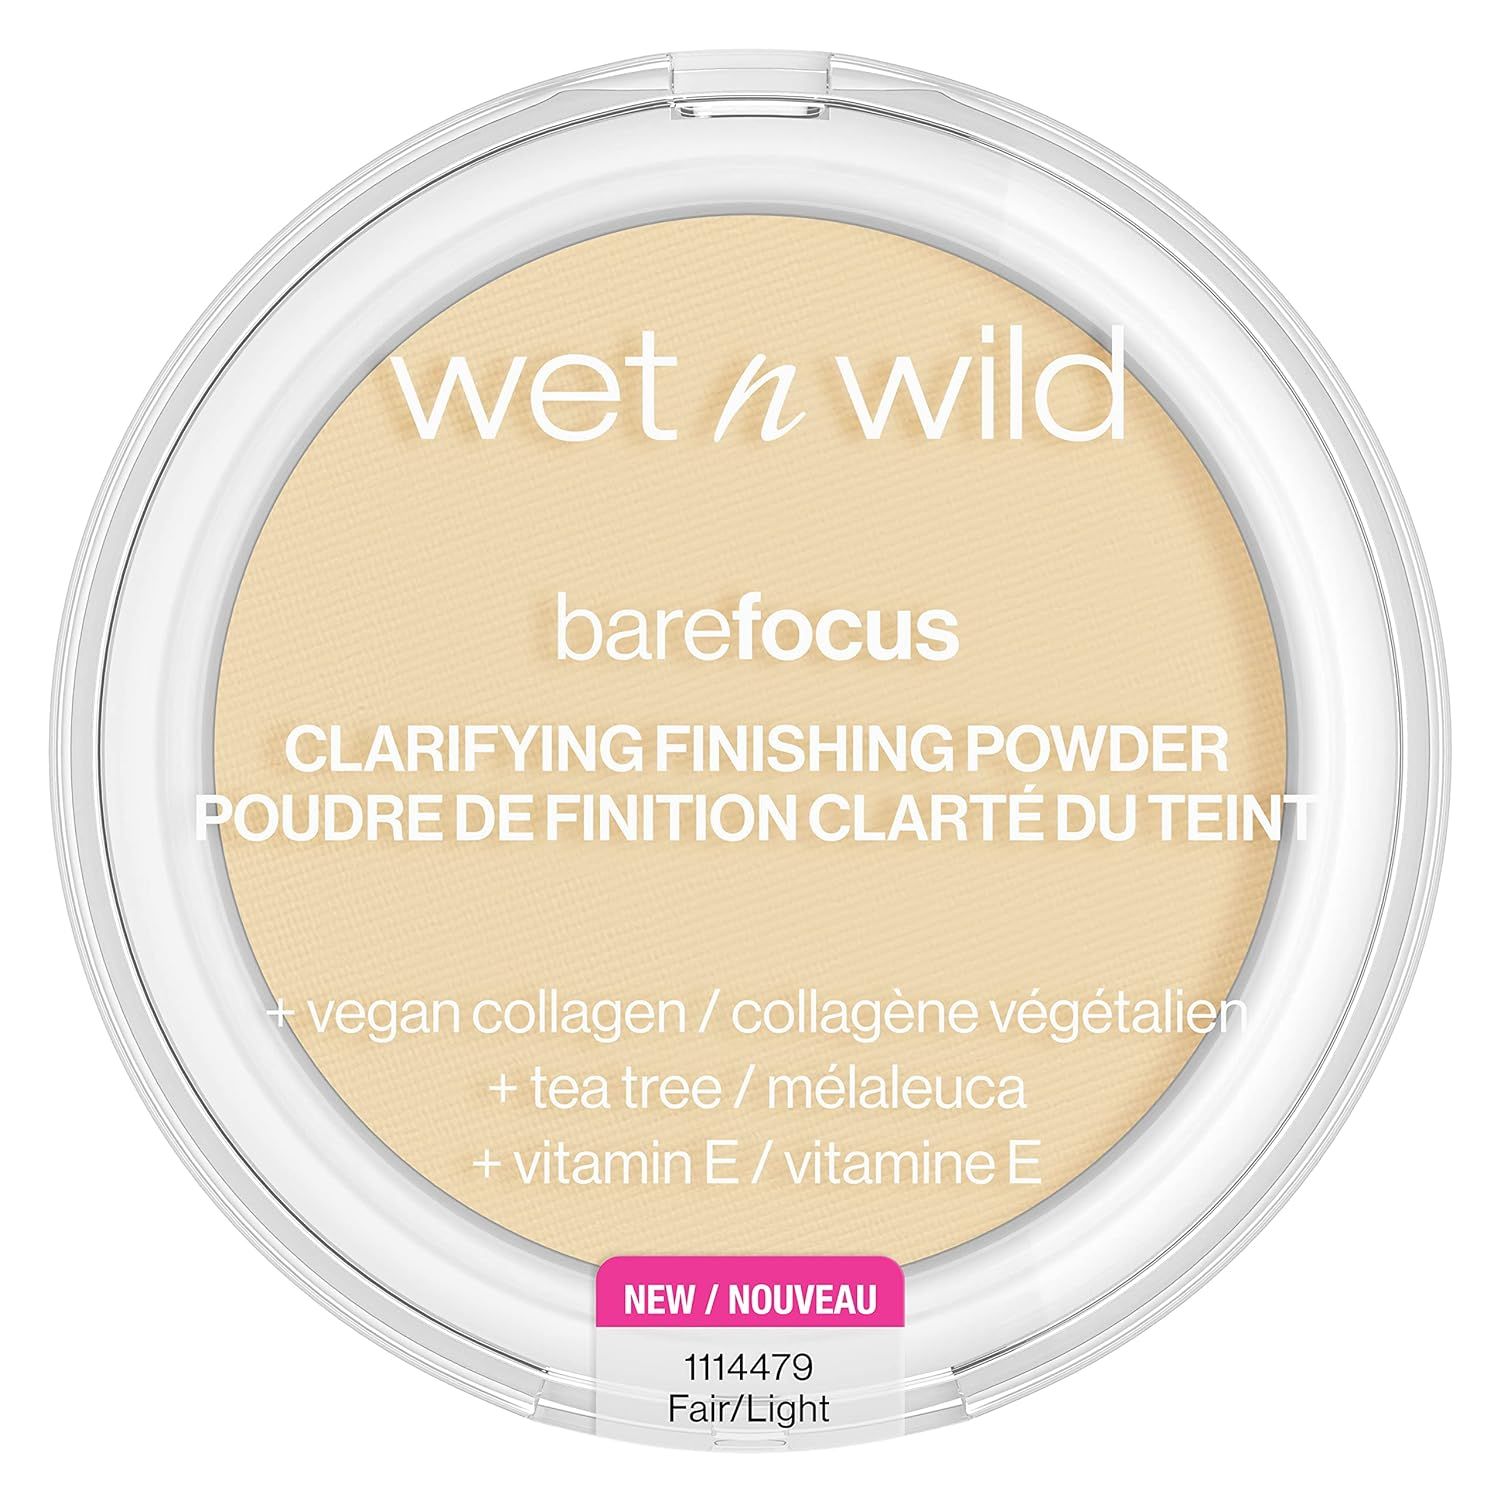 Wet n Wild Bare Focus Clarifying Finishing Powder | Matte | Pressed Setting Powder Fair-Light | Amazon (US)